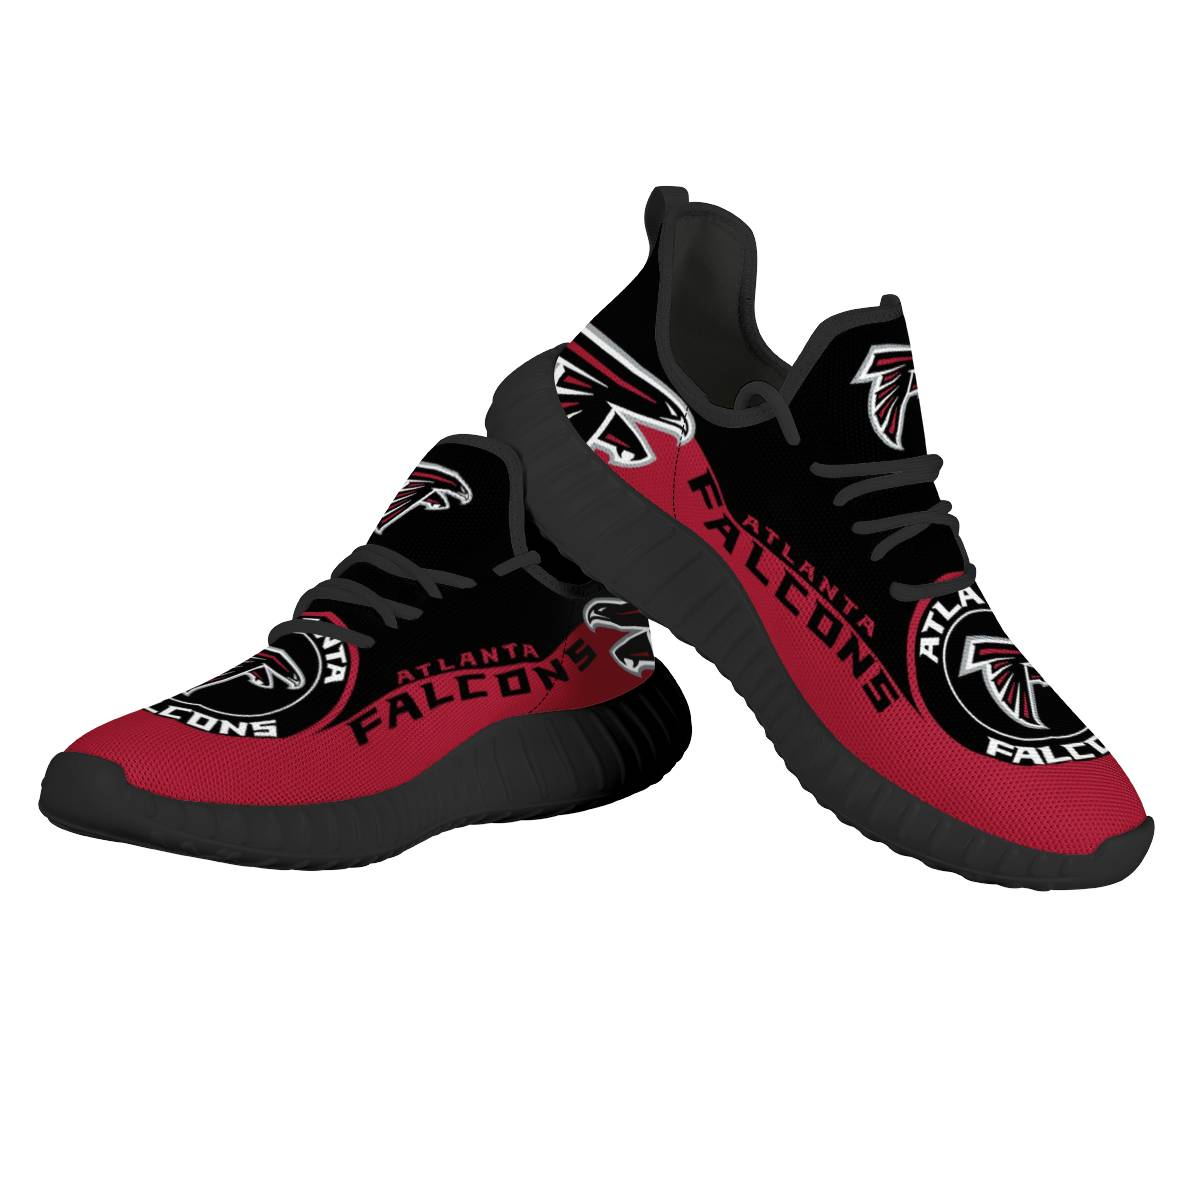 Women's NFL Atlanta Falcons Mesh Knit Sneakers/Shoes 004